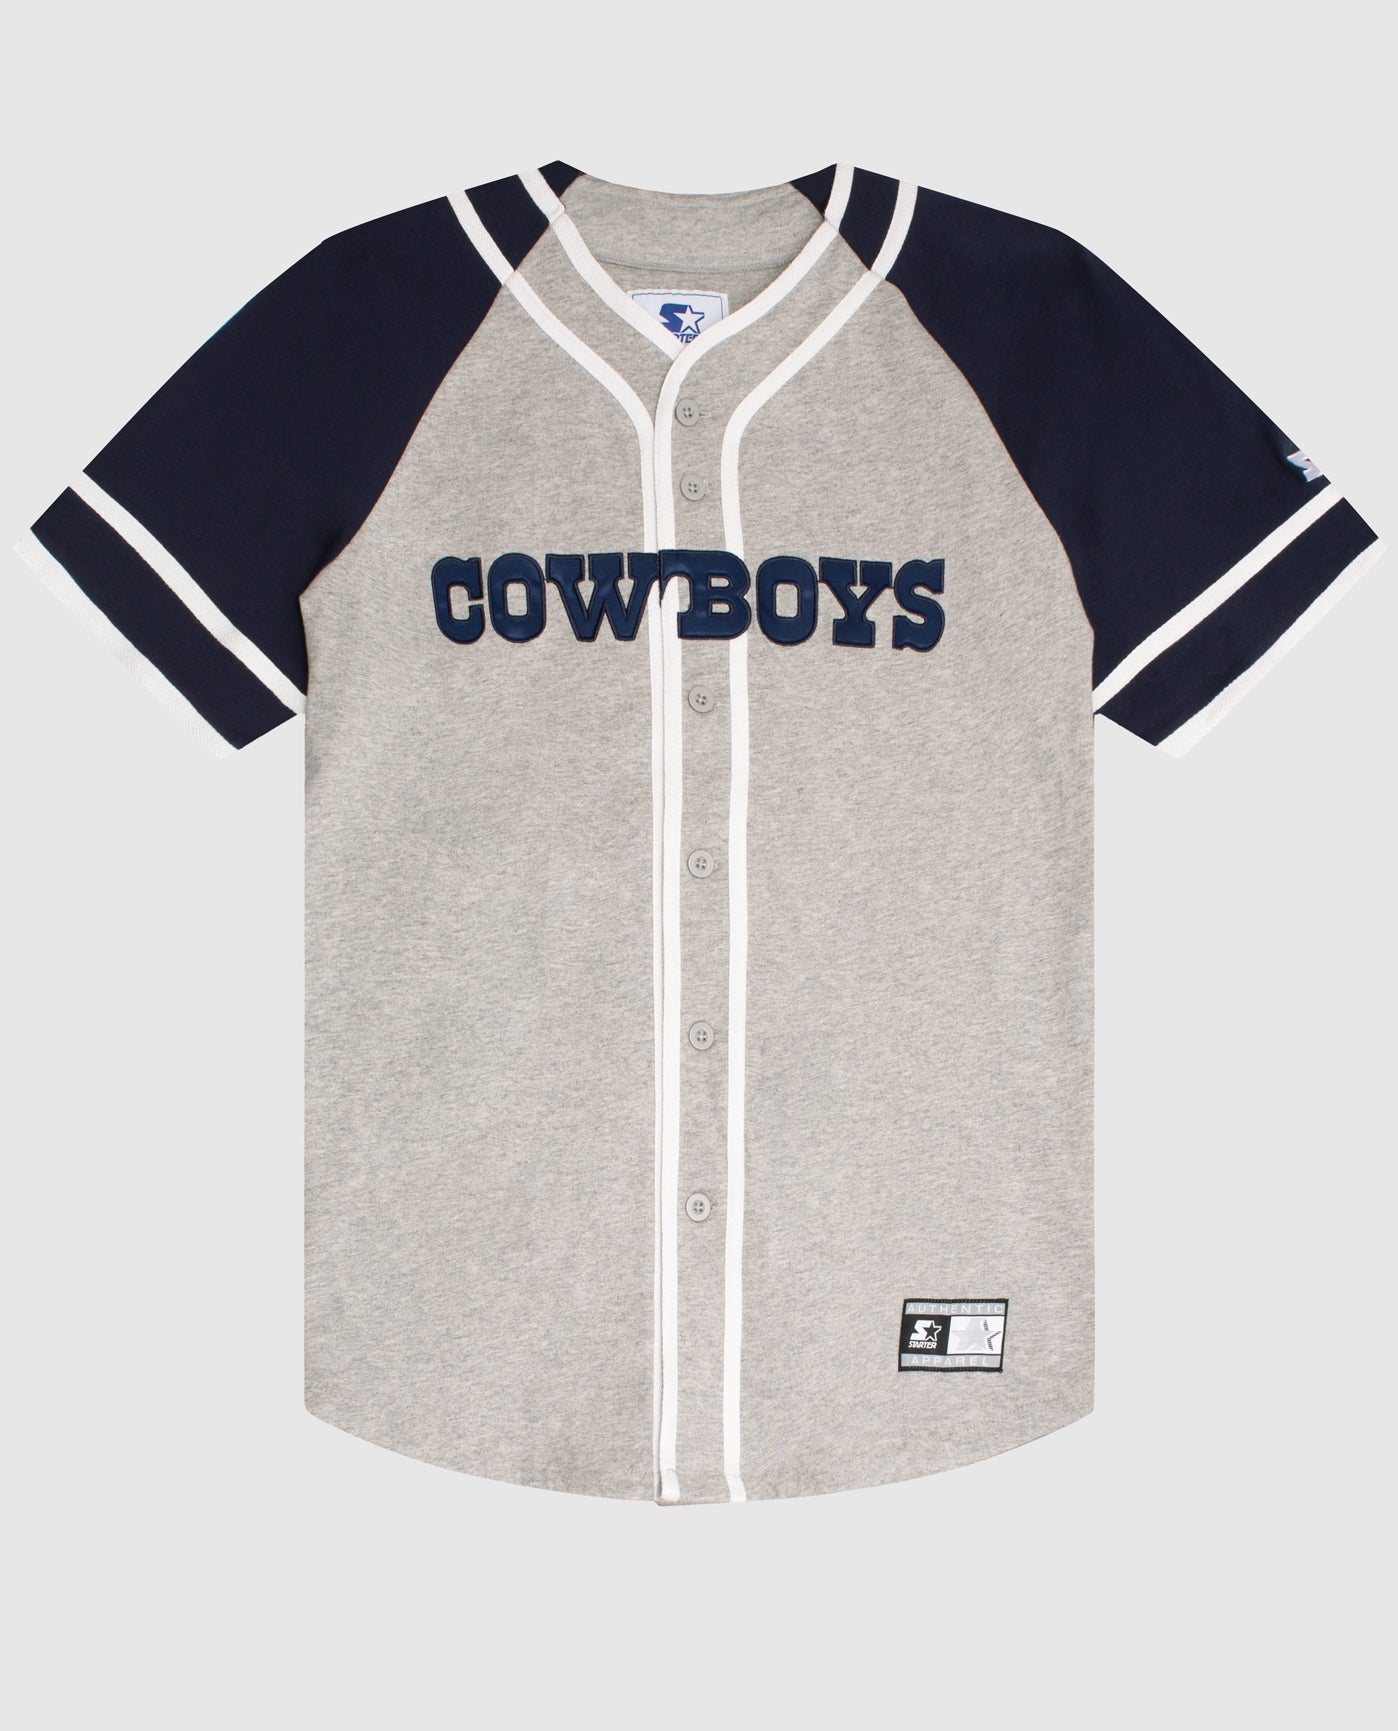 cowboys baseball jersey